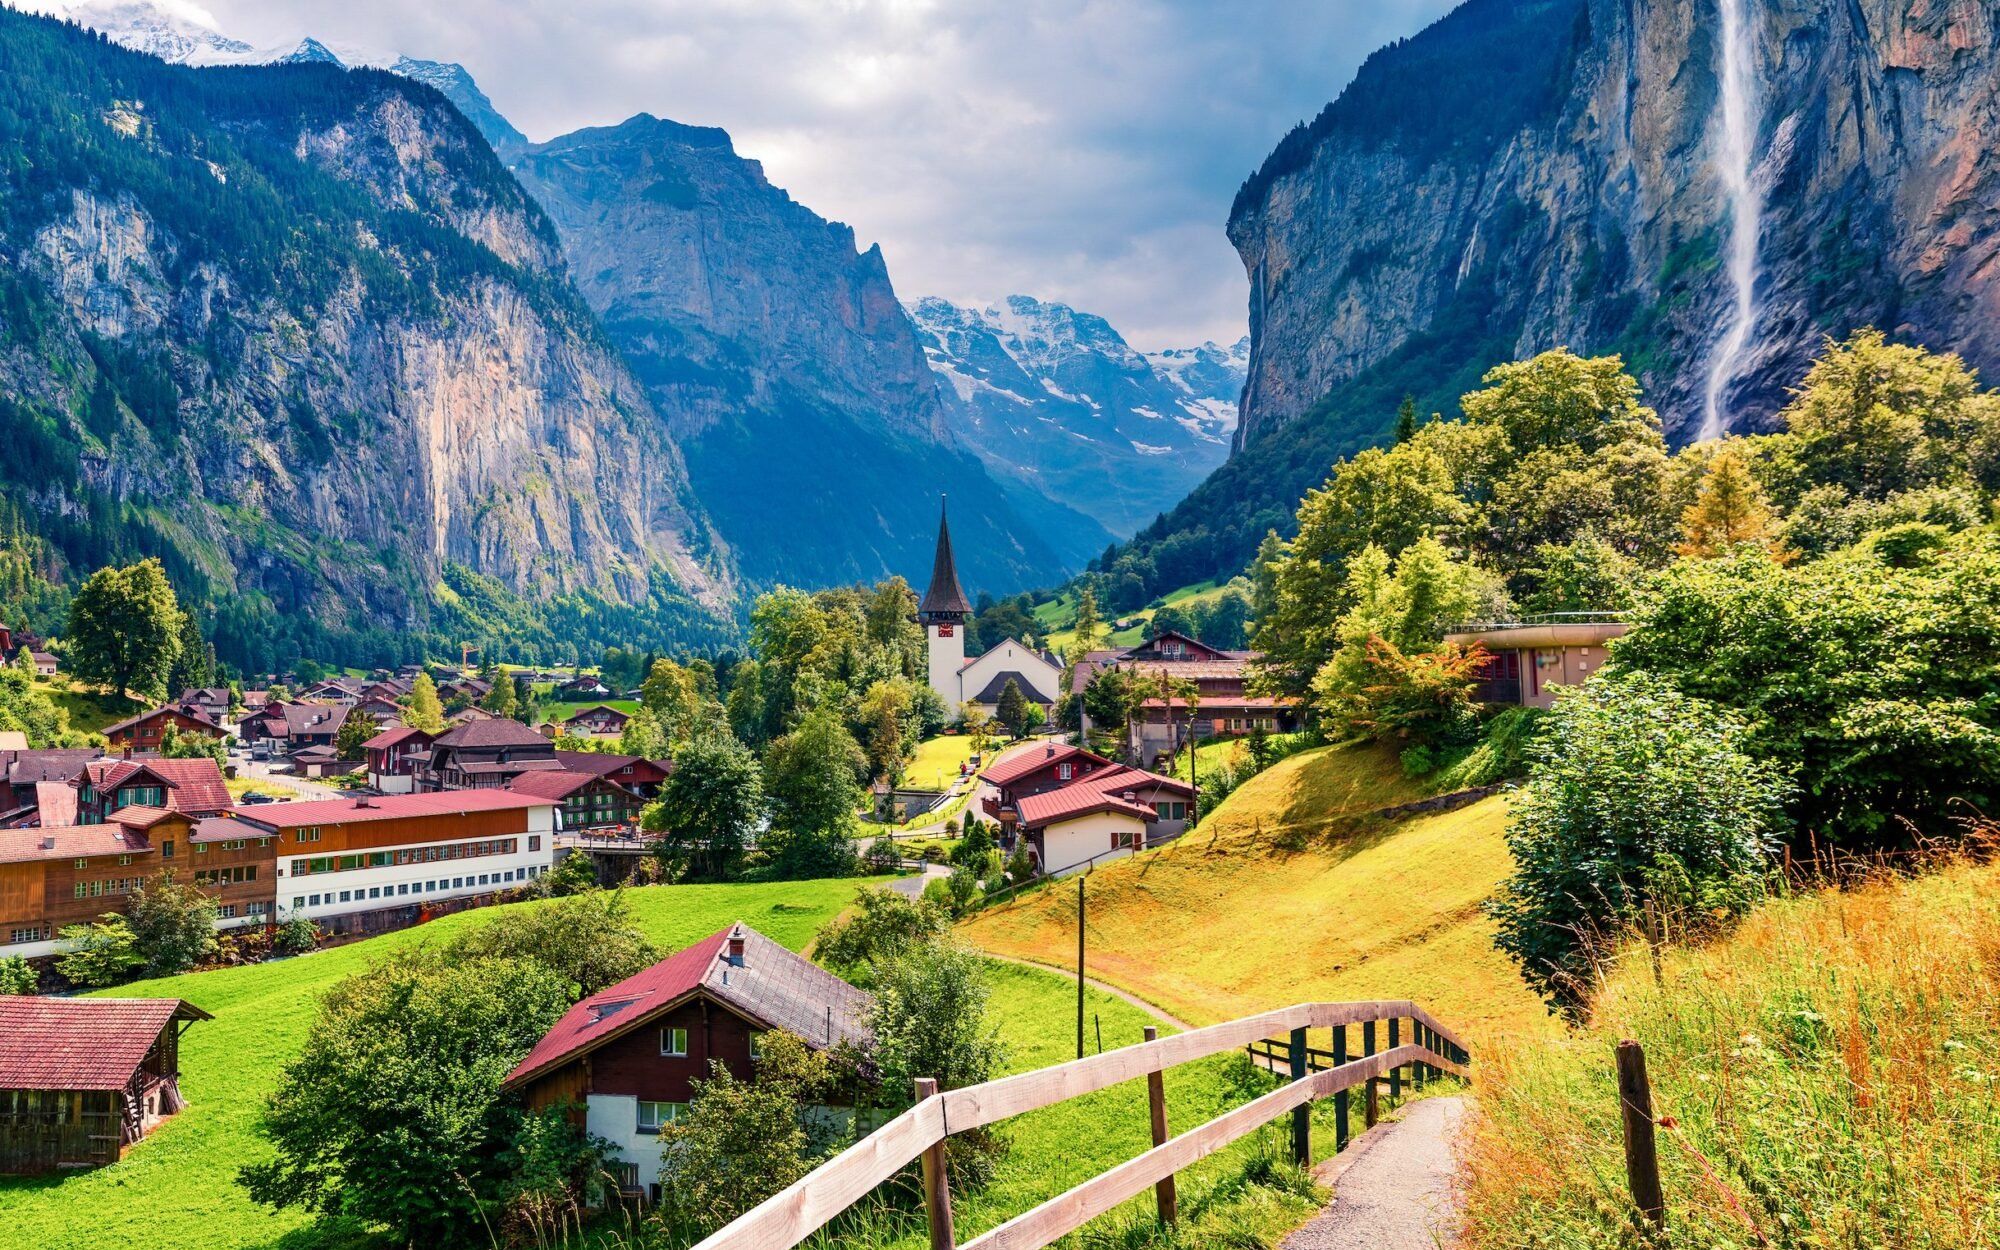 【4k】【lauterbrunnen】最美的瑞士乡村之一/ 梦幻般的世界/ 闲适